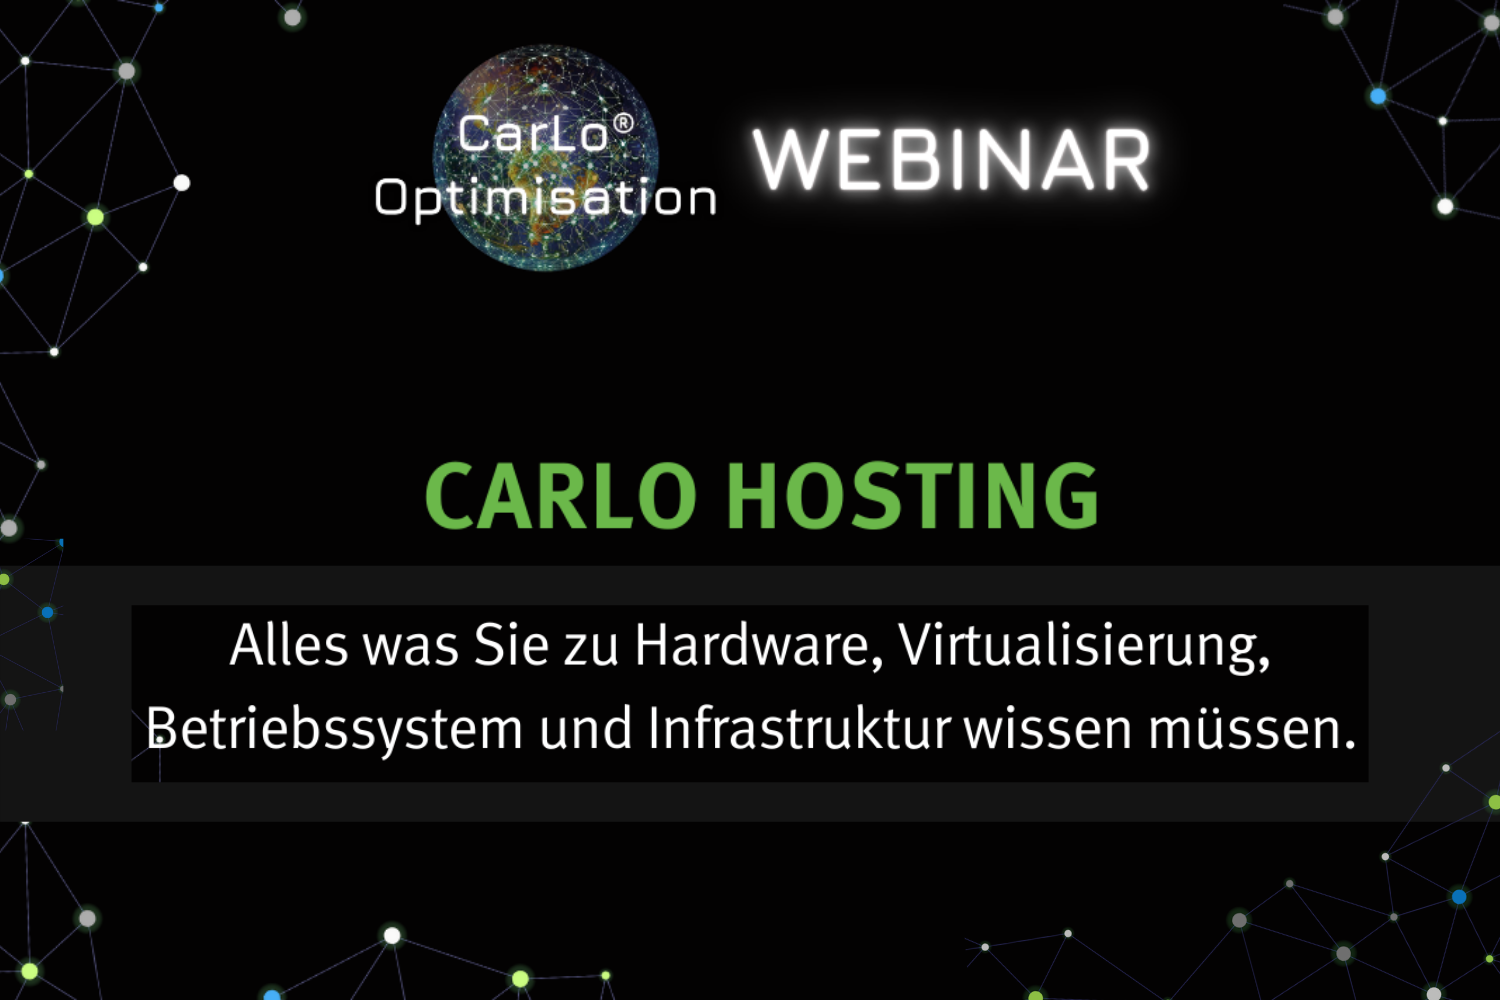 CarLo Optimisation Webinar: CarLo Hosting